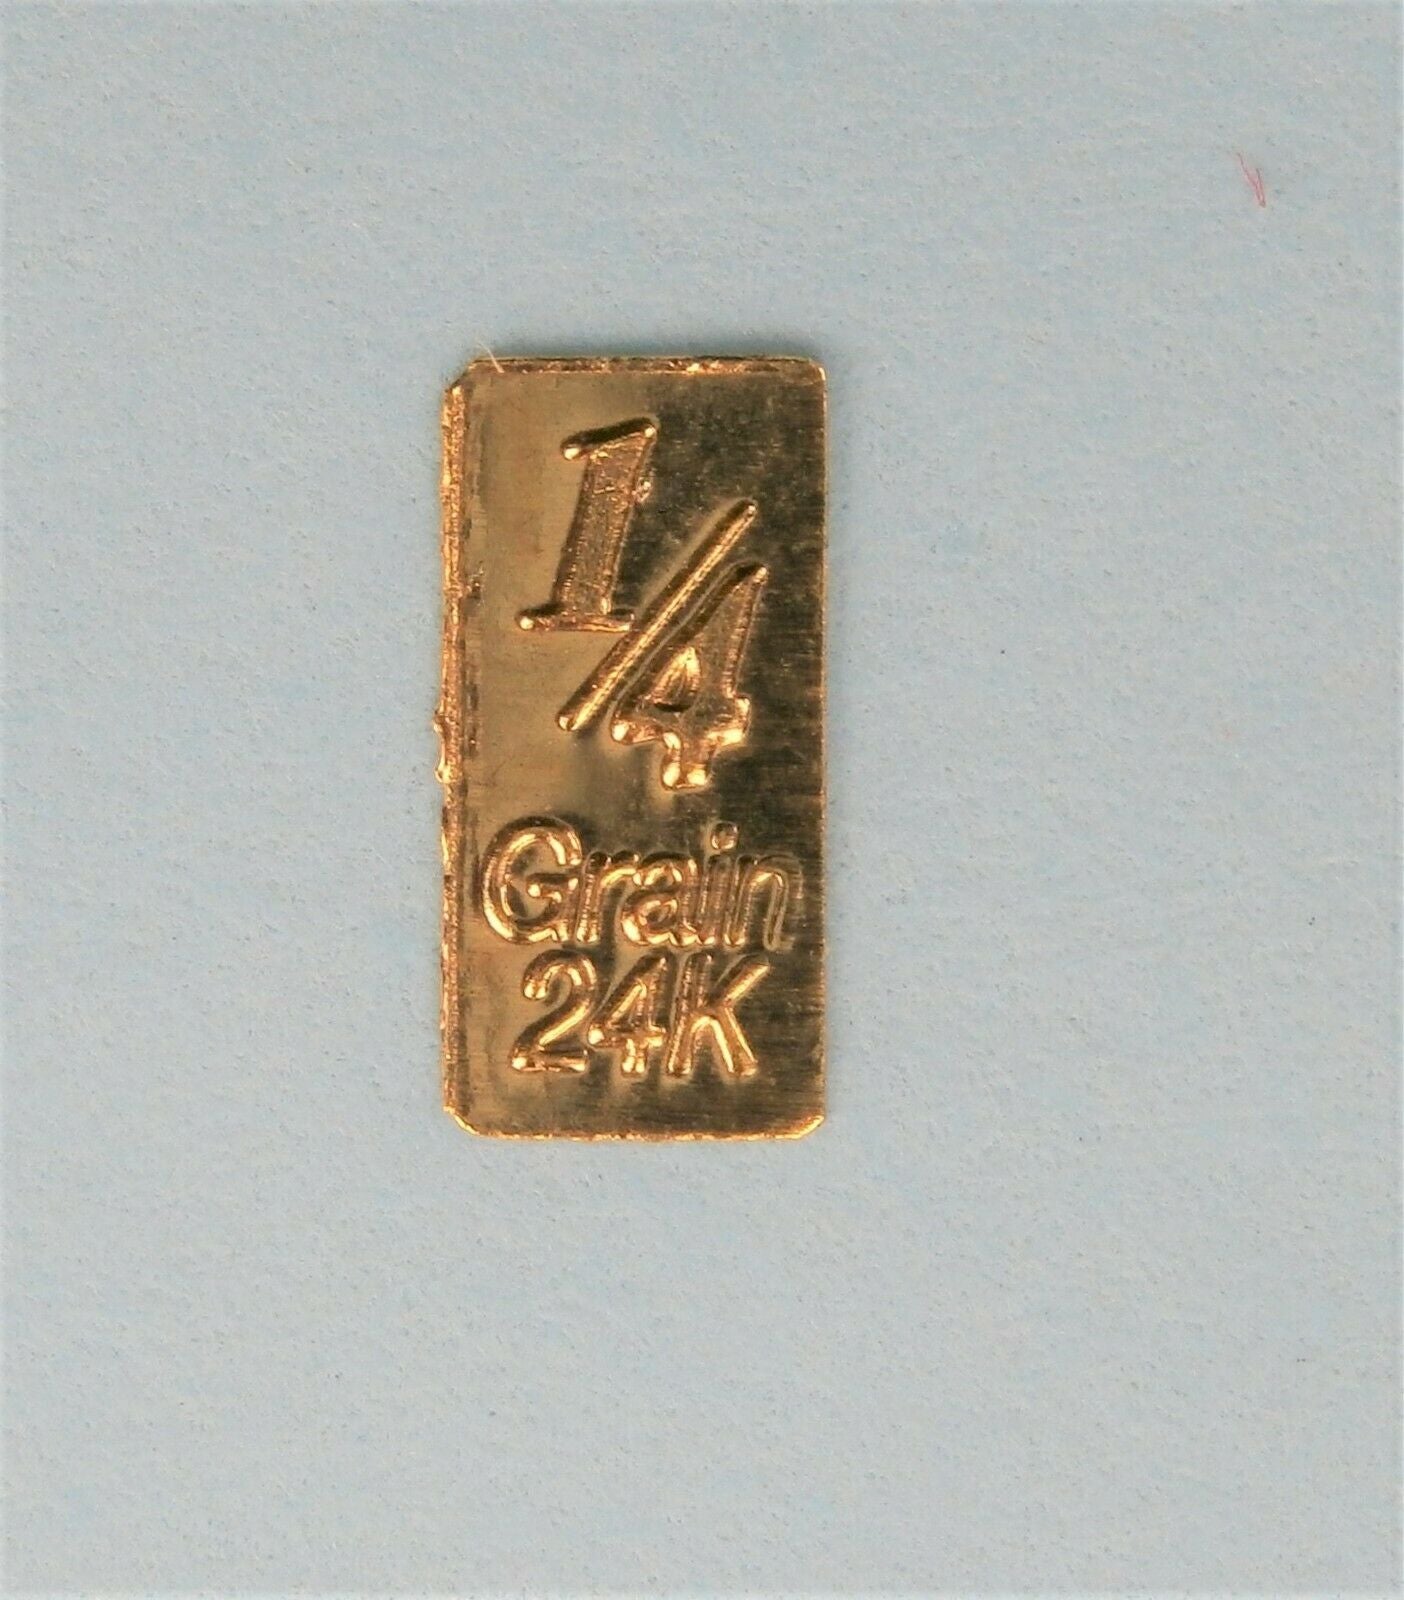 LOT 10 X 1/4 GRAIN .9999 FINE 24K GOLD BULLION BARS “FIRST RESPONDERS” - IN COA CARD